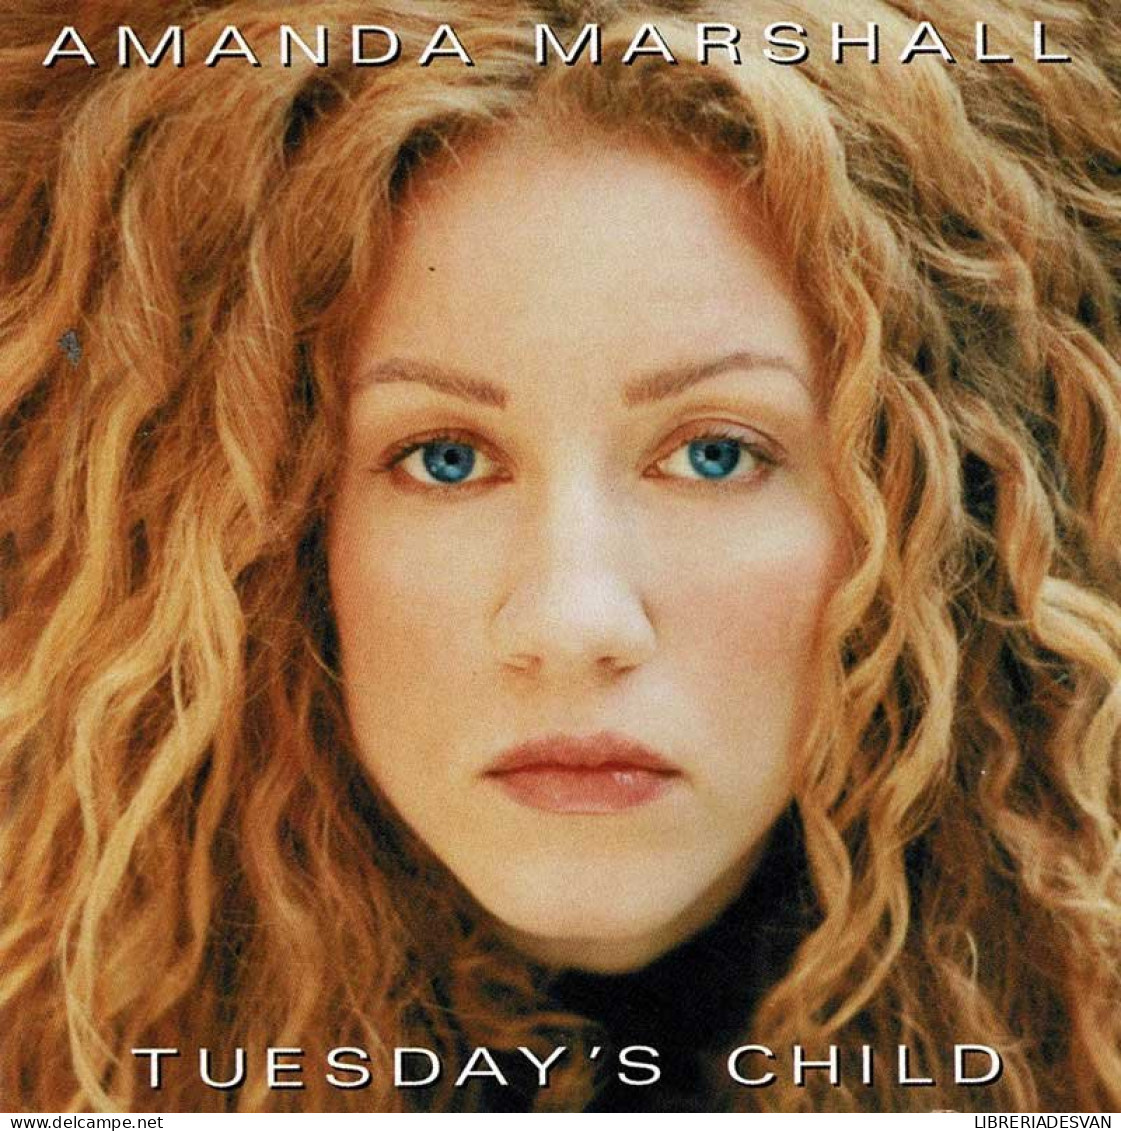 Amanda Marshall - Tuesday's Child. CD - Disco, Pop